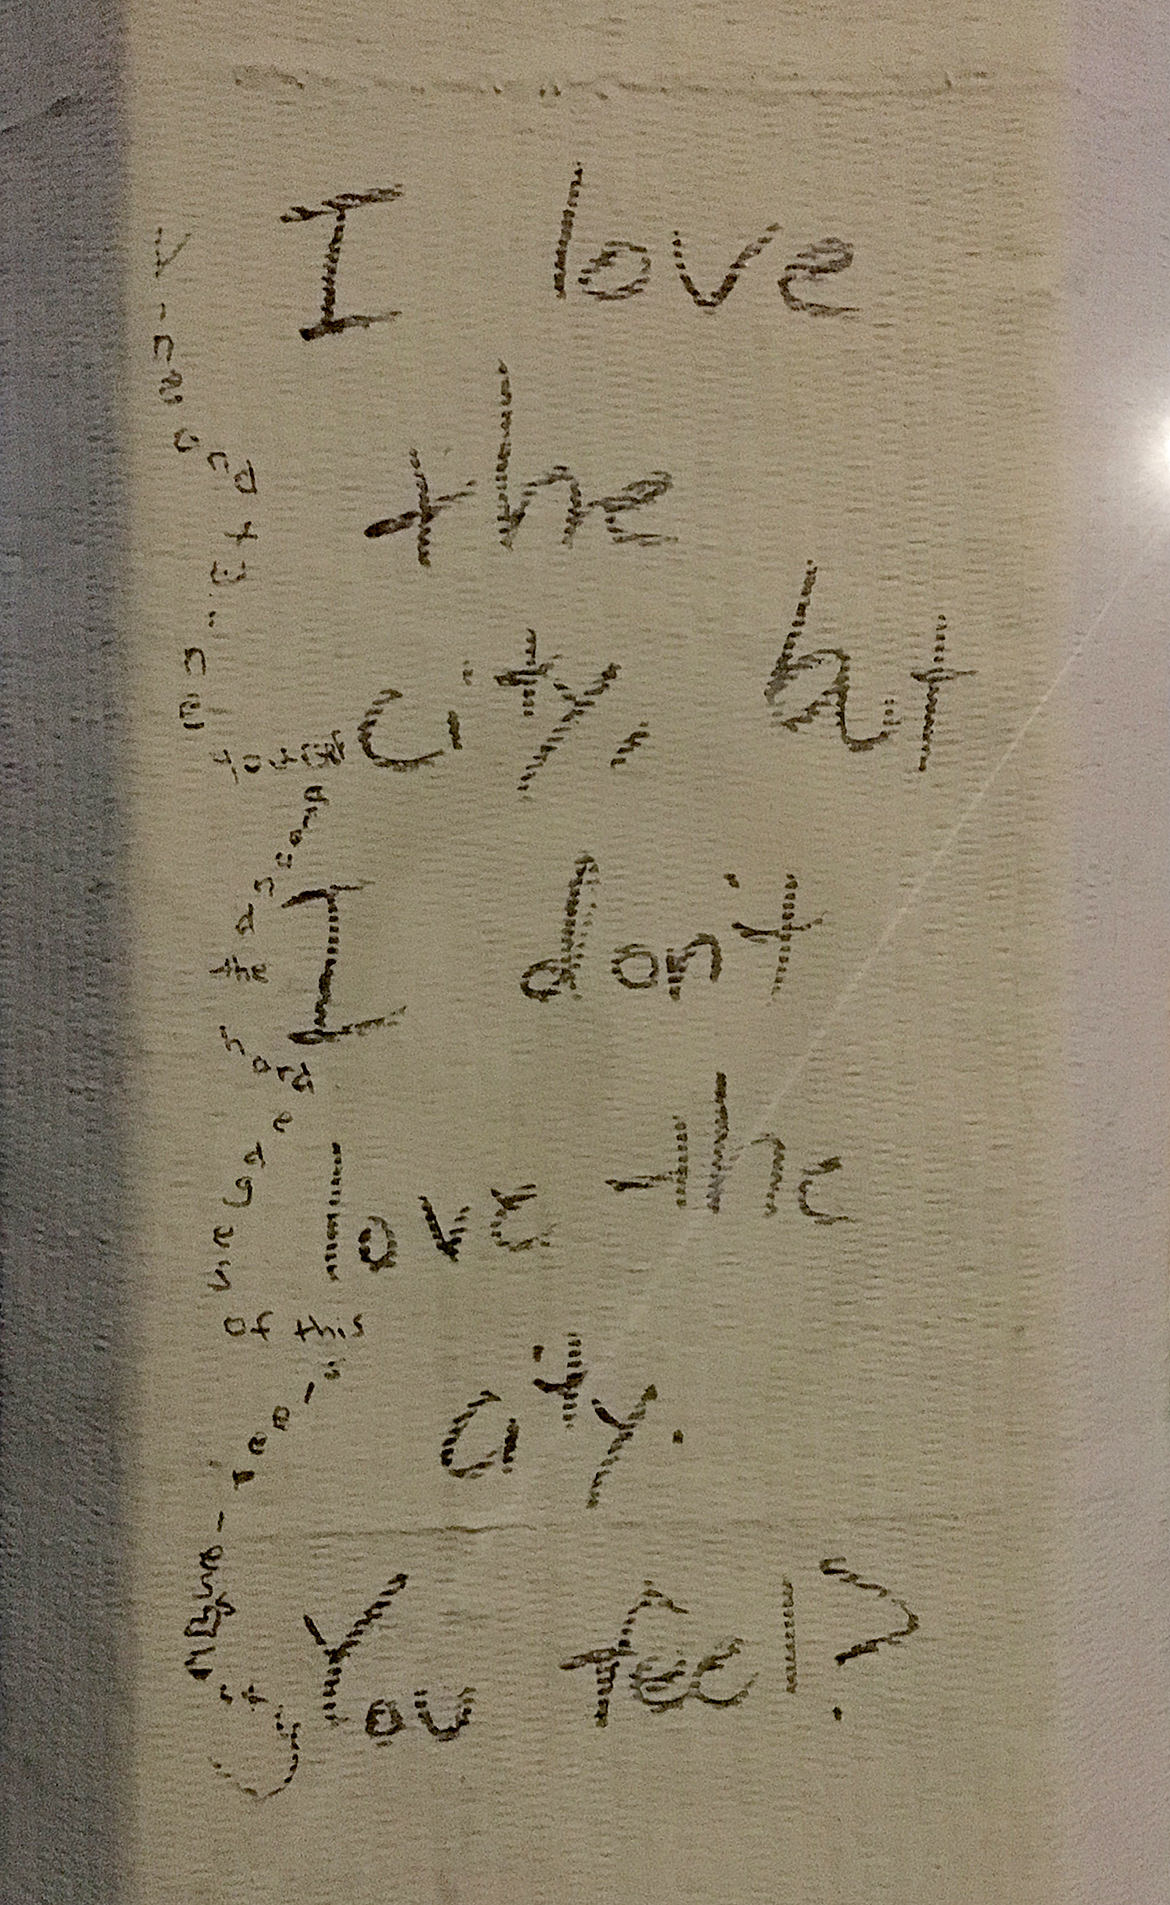 graffiti writing, "i love the city, but I don't love the city, you feel?"